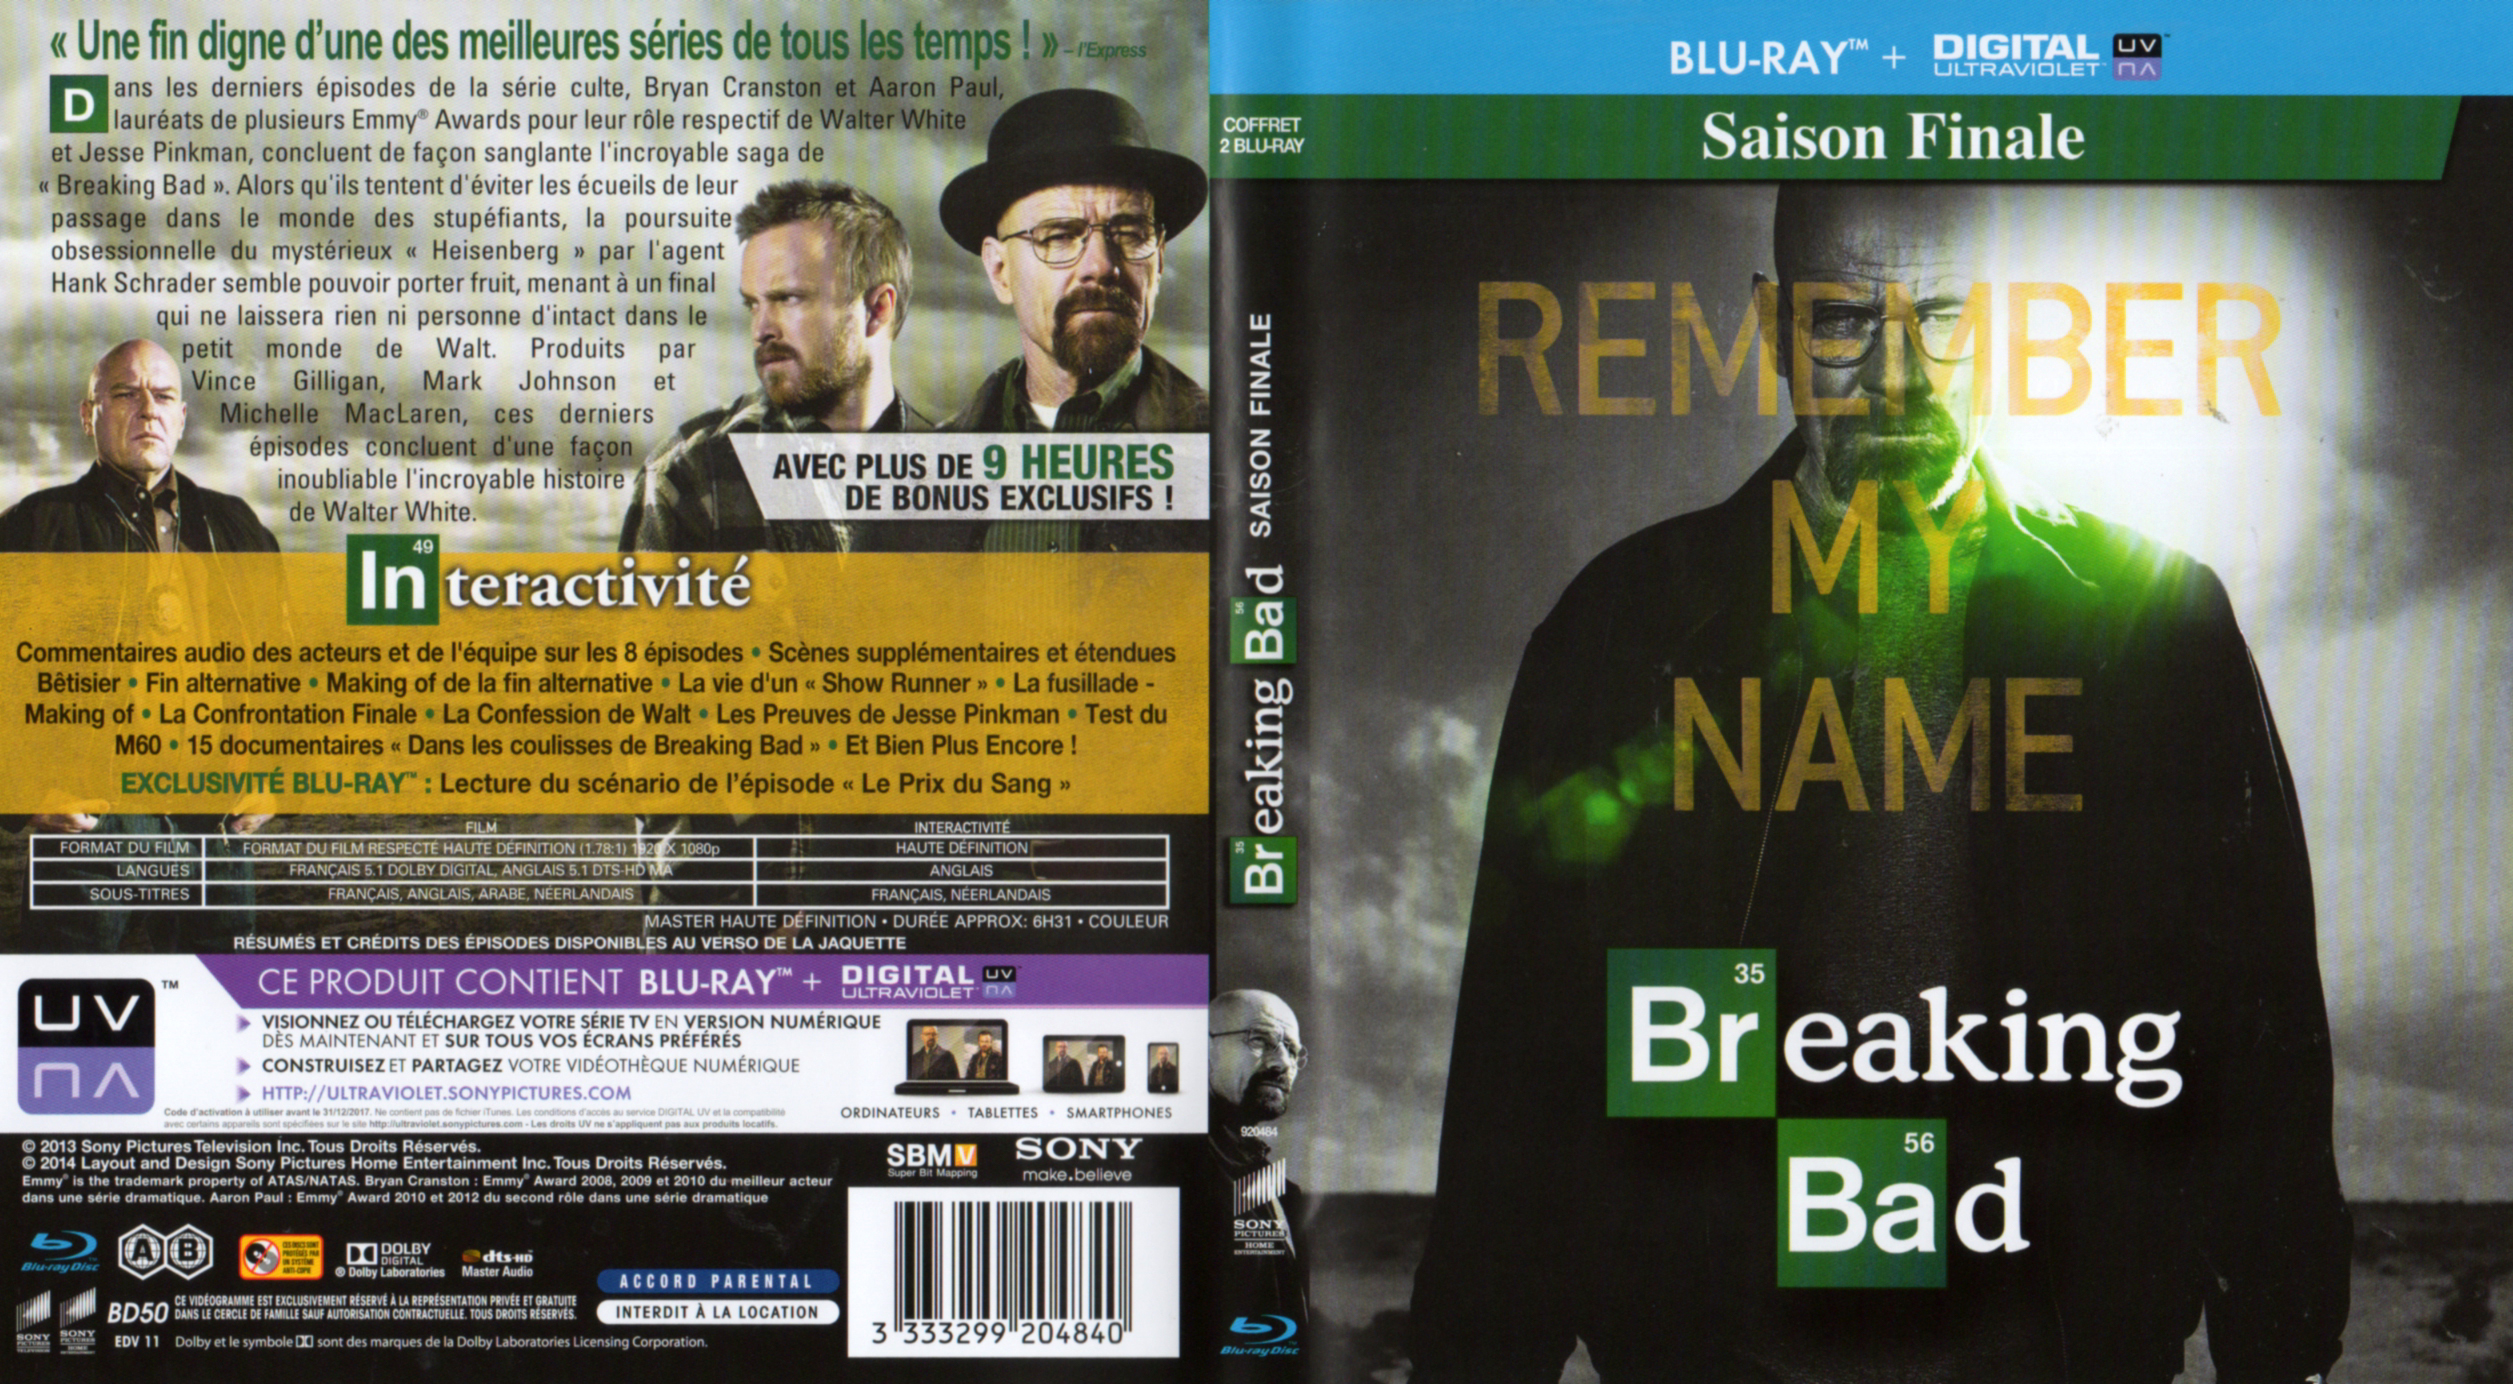 Jaquette DVD Breaking Bad Saison Finale (BLU-RAY)